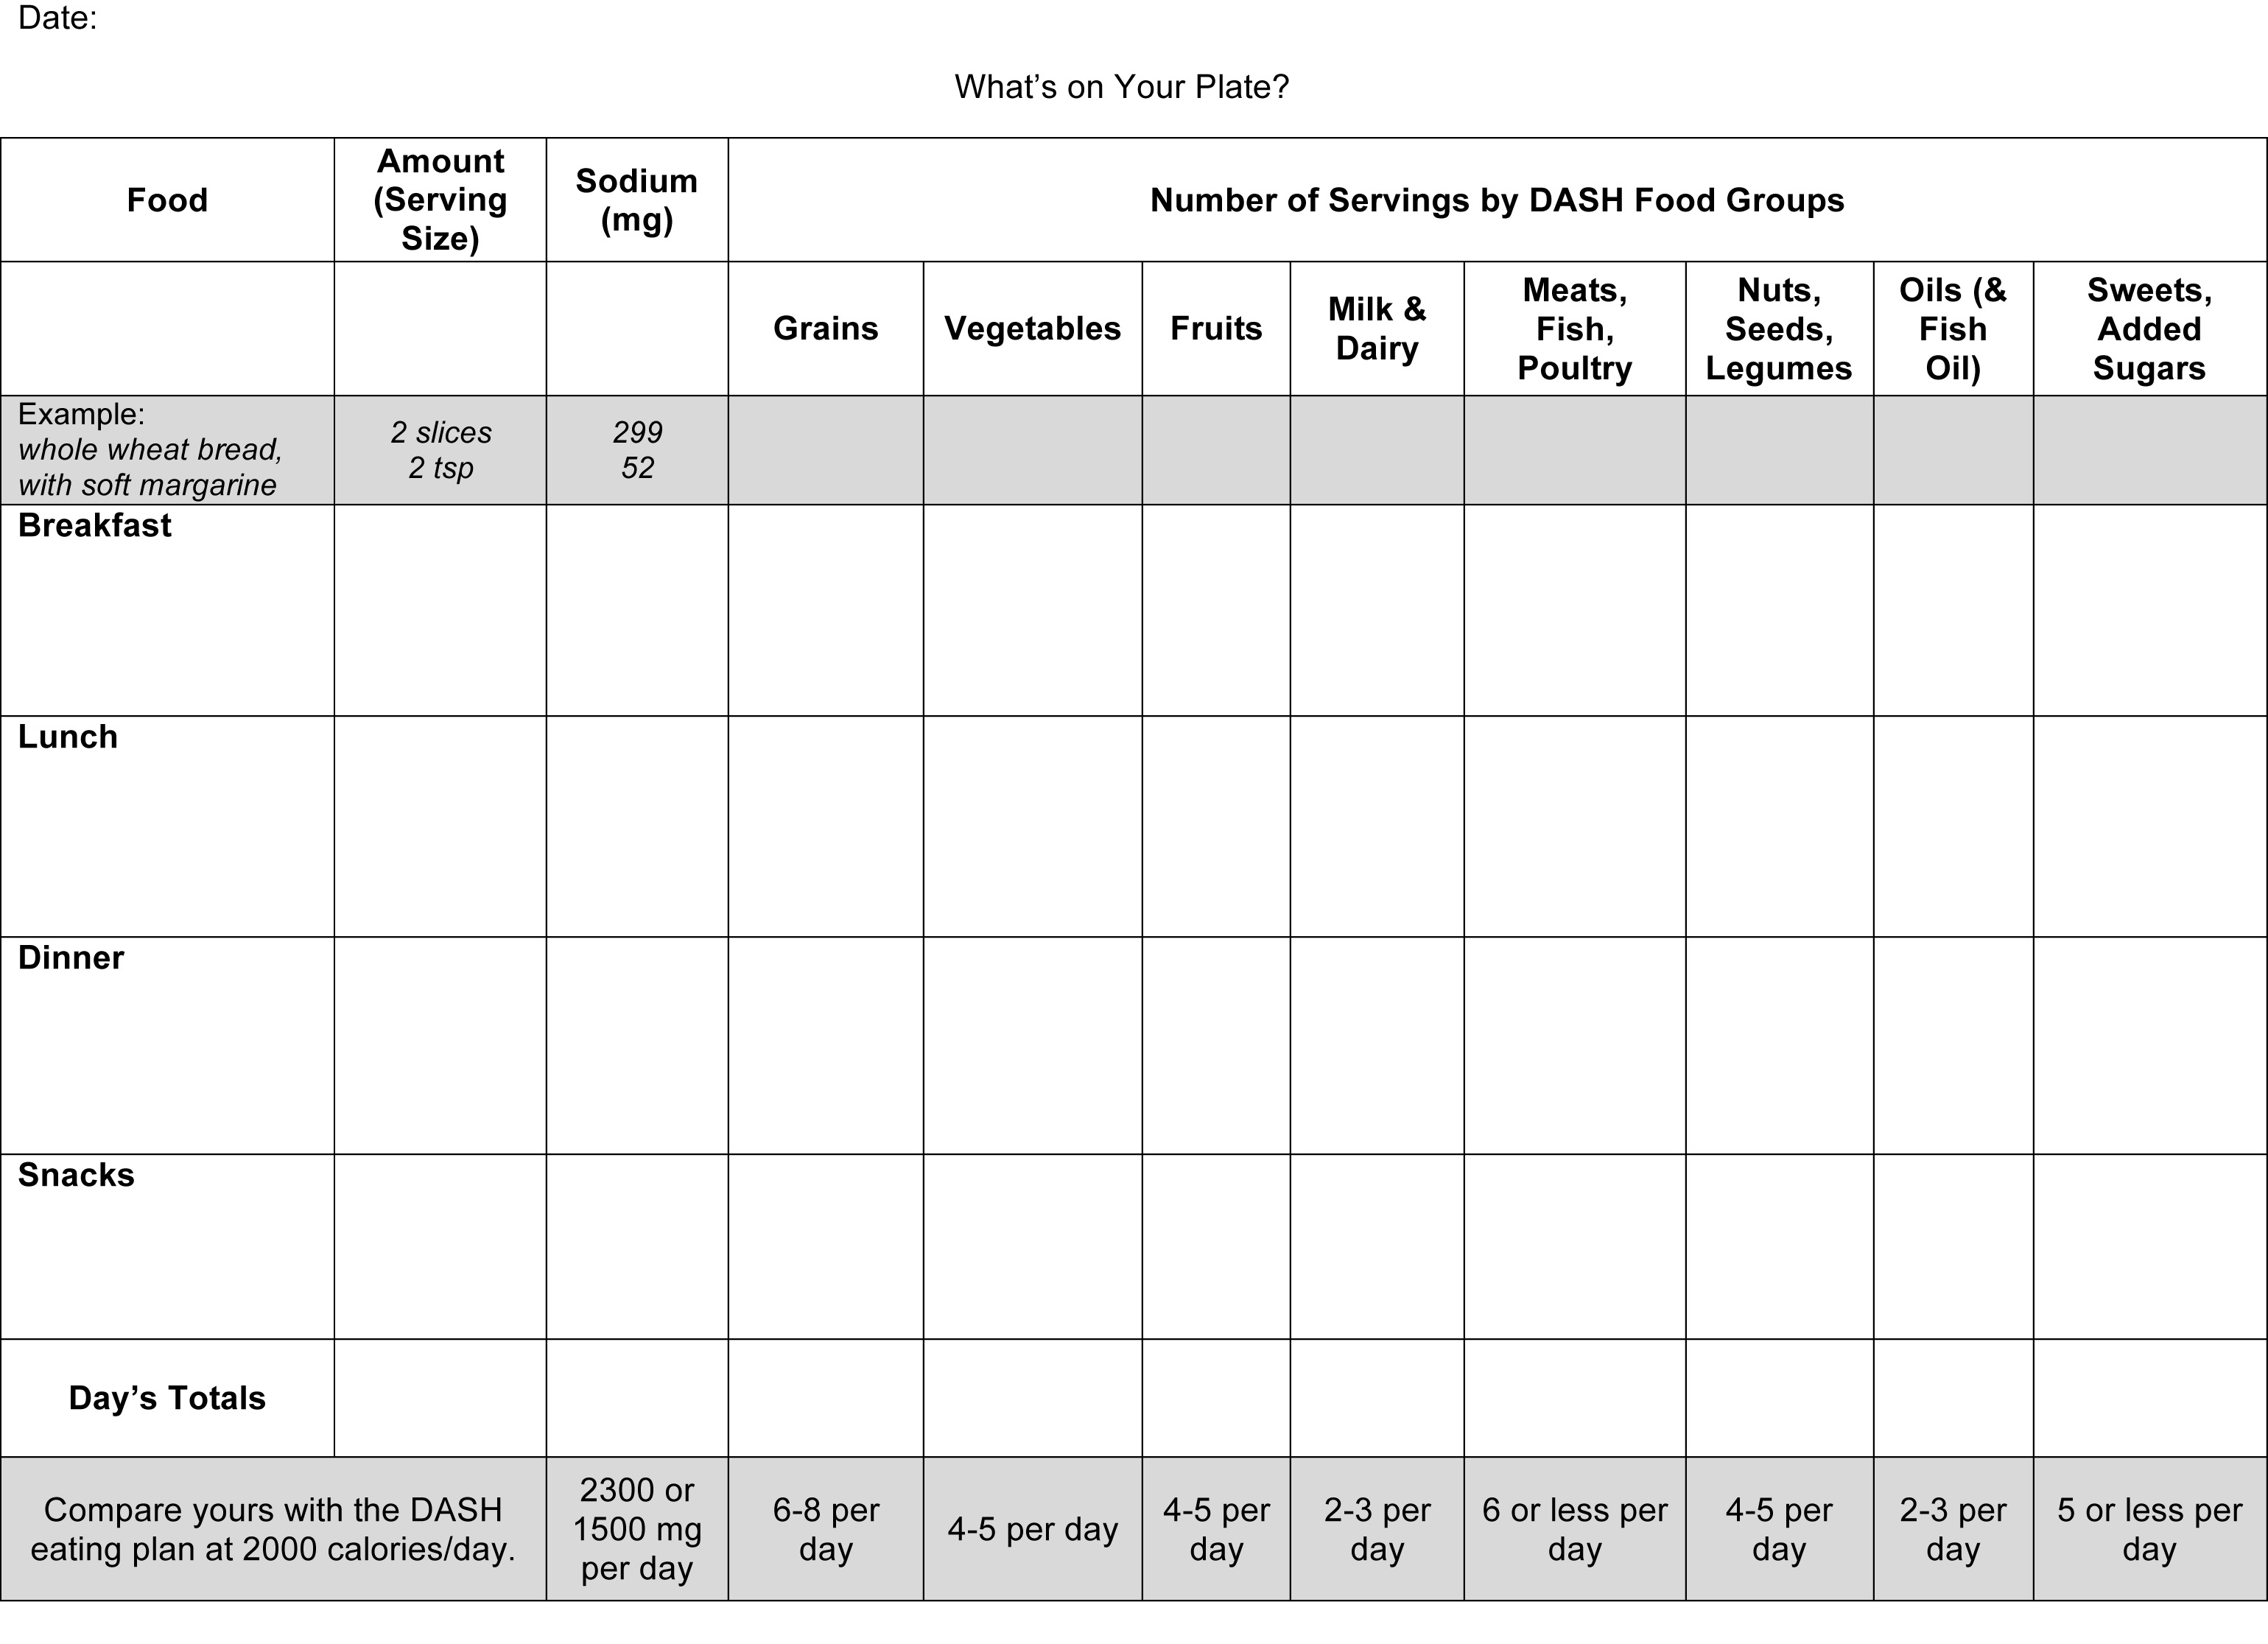 Printable Blood Pressure Chart PDF